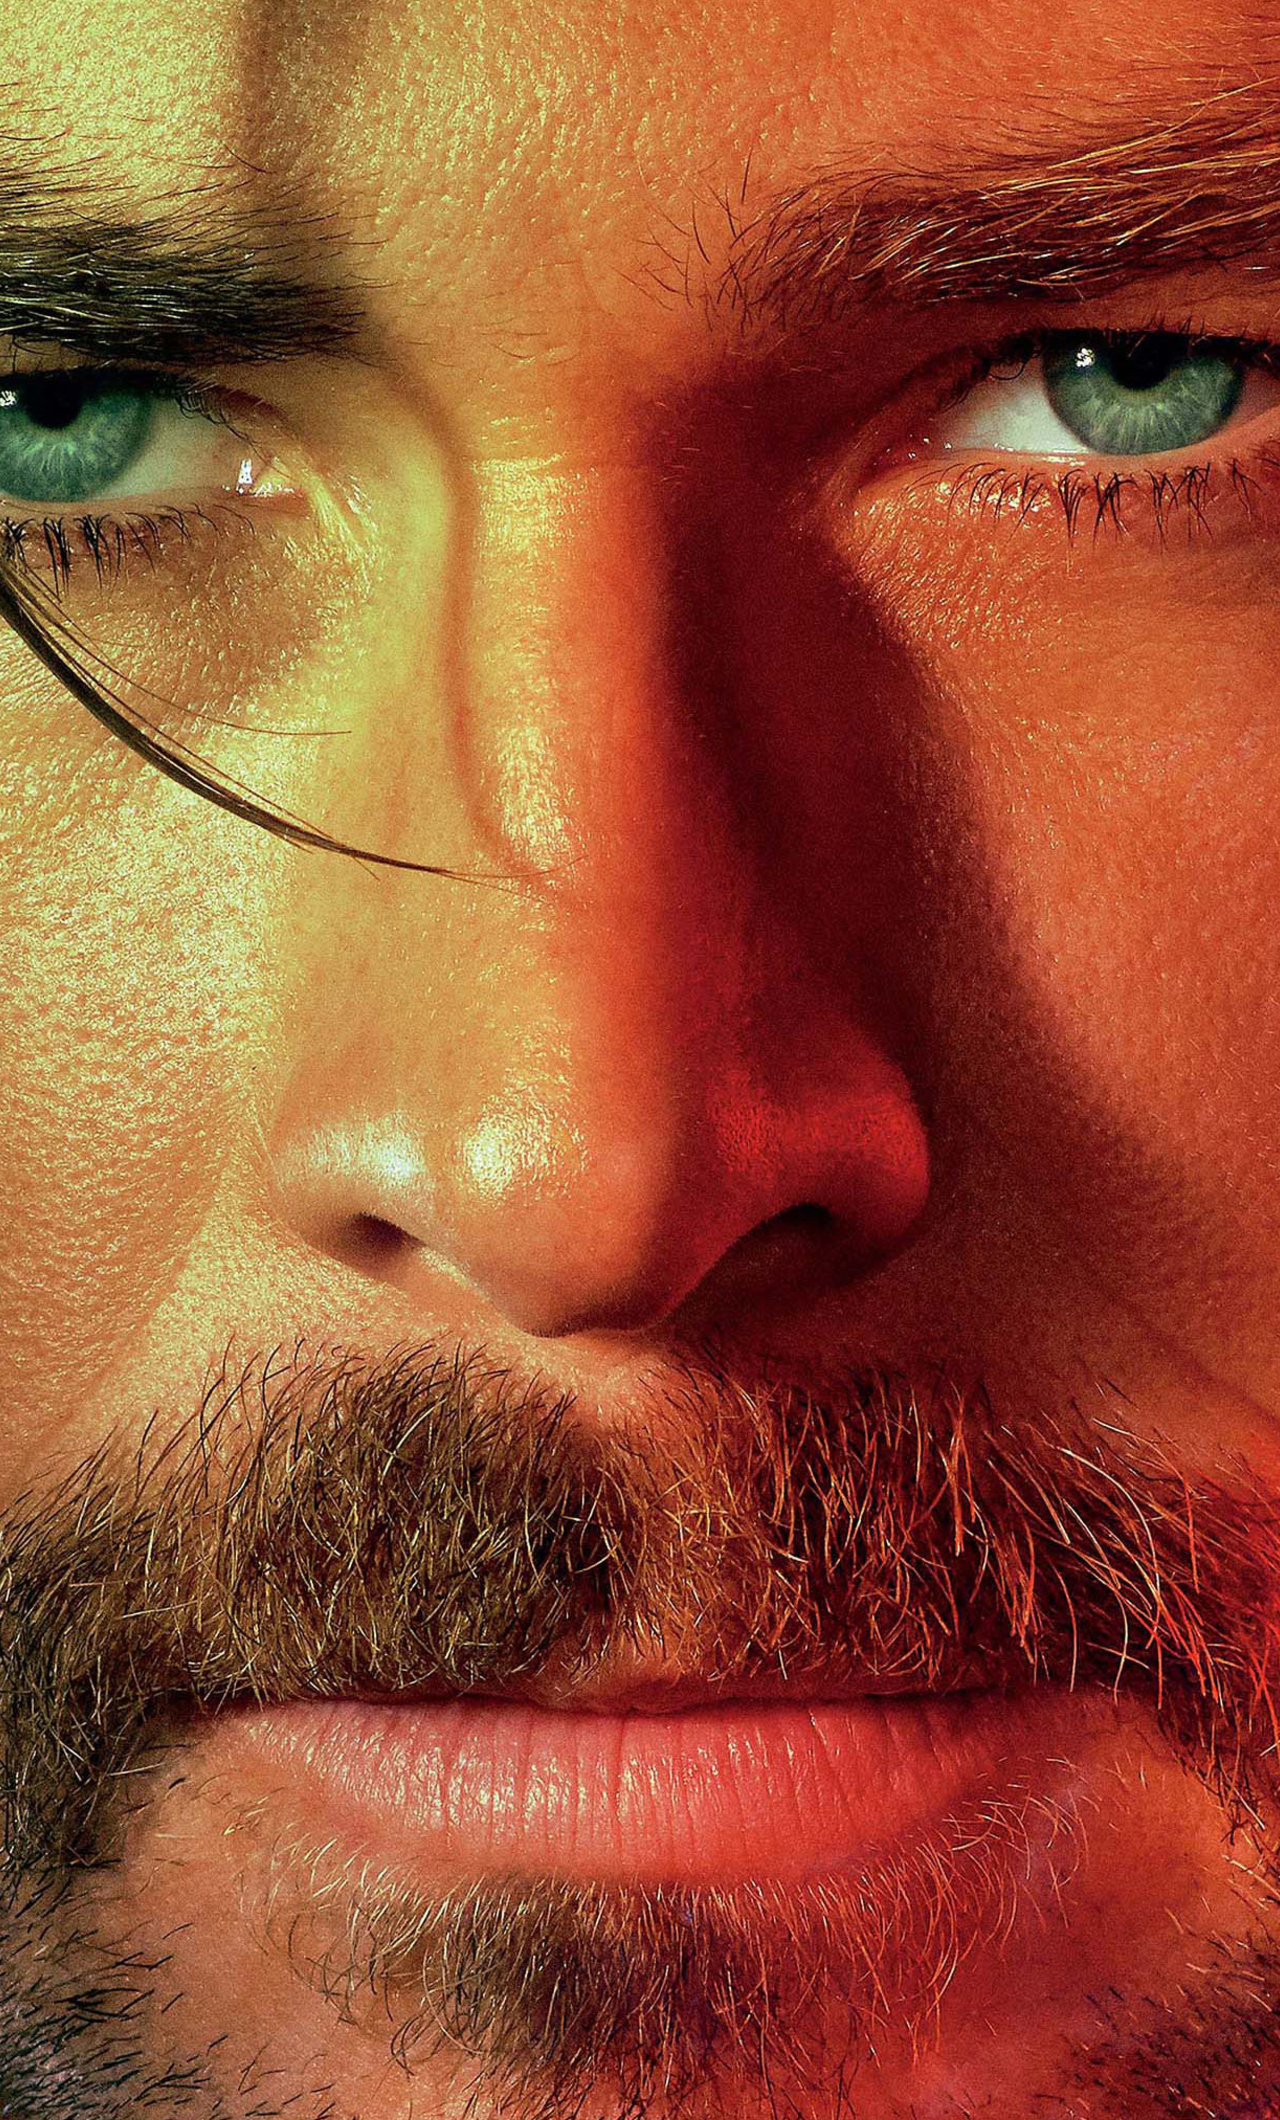 Chris Hemsworth Bad Times At The El Royale 2018 Wallpapers